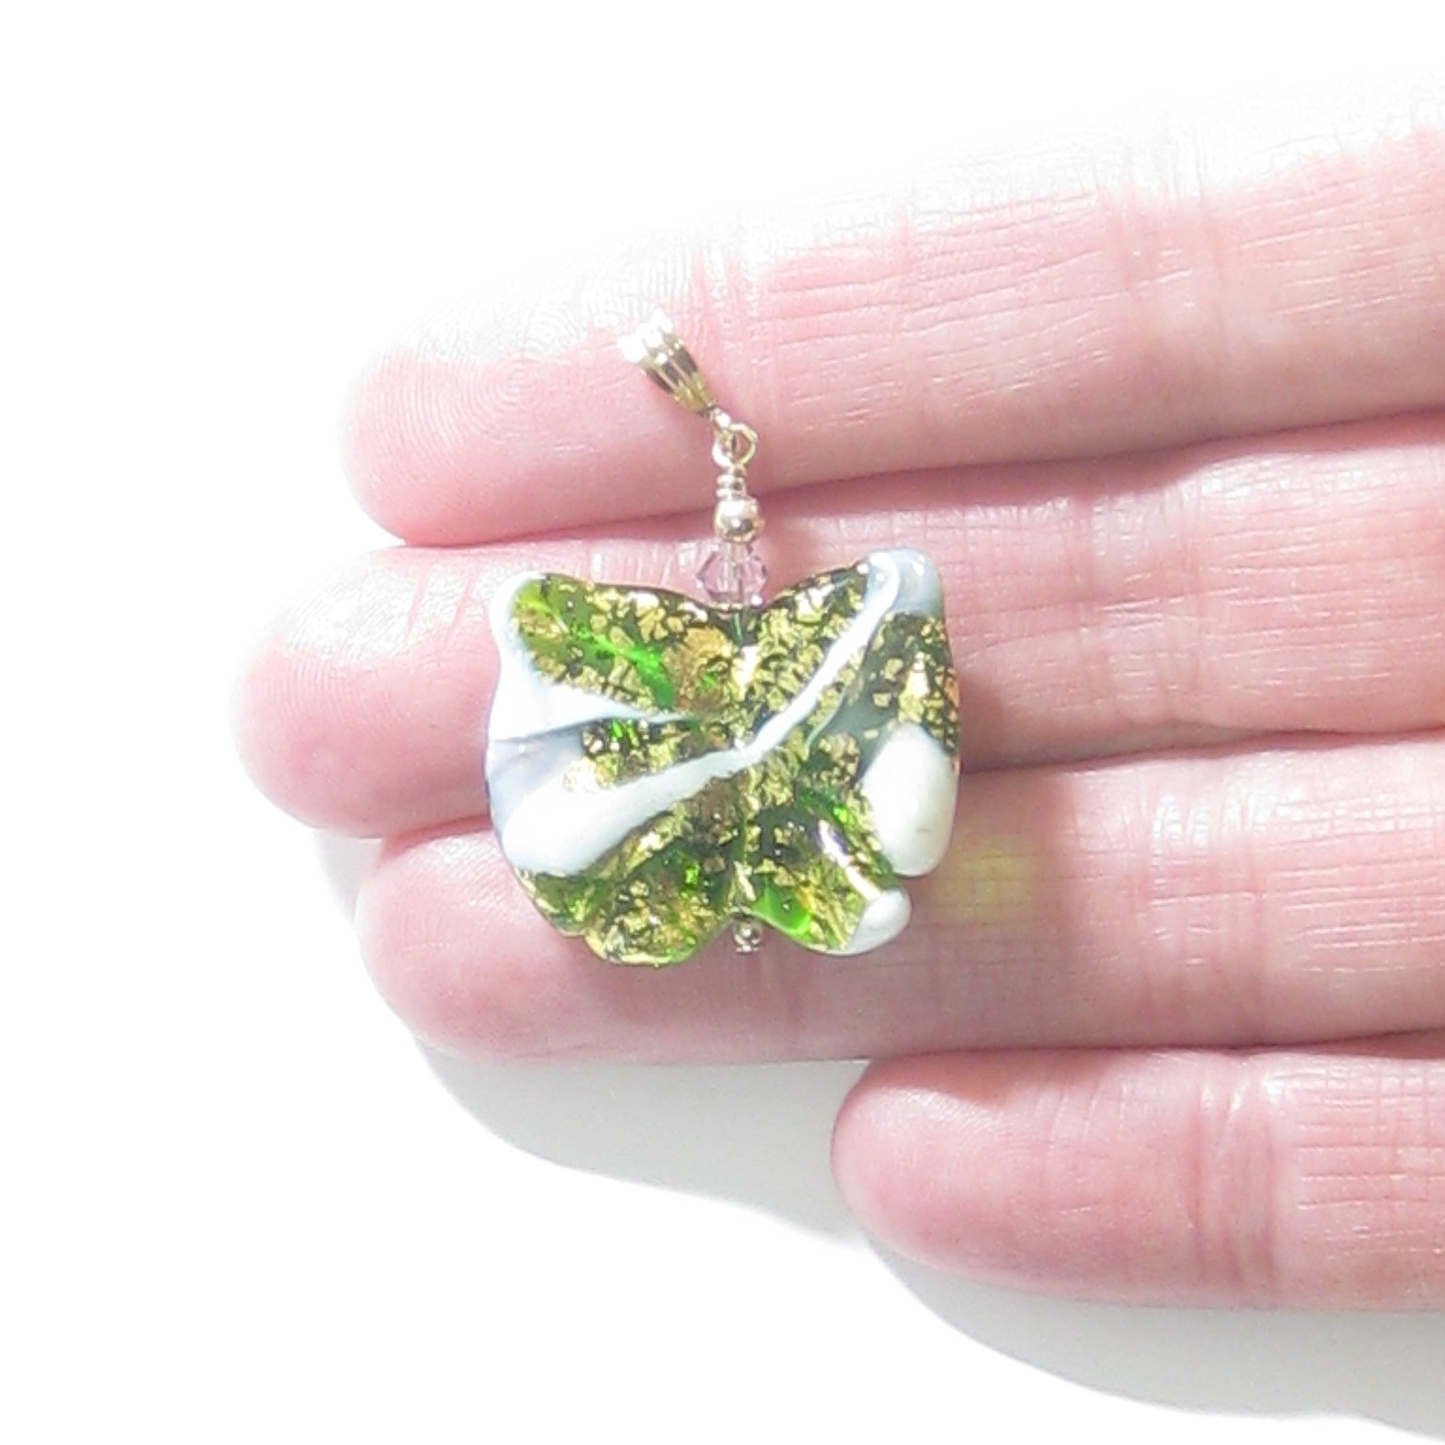 Murano Glass Green White Butterfly Pendant Necklace - JKC Murano